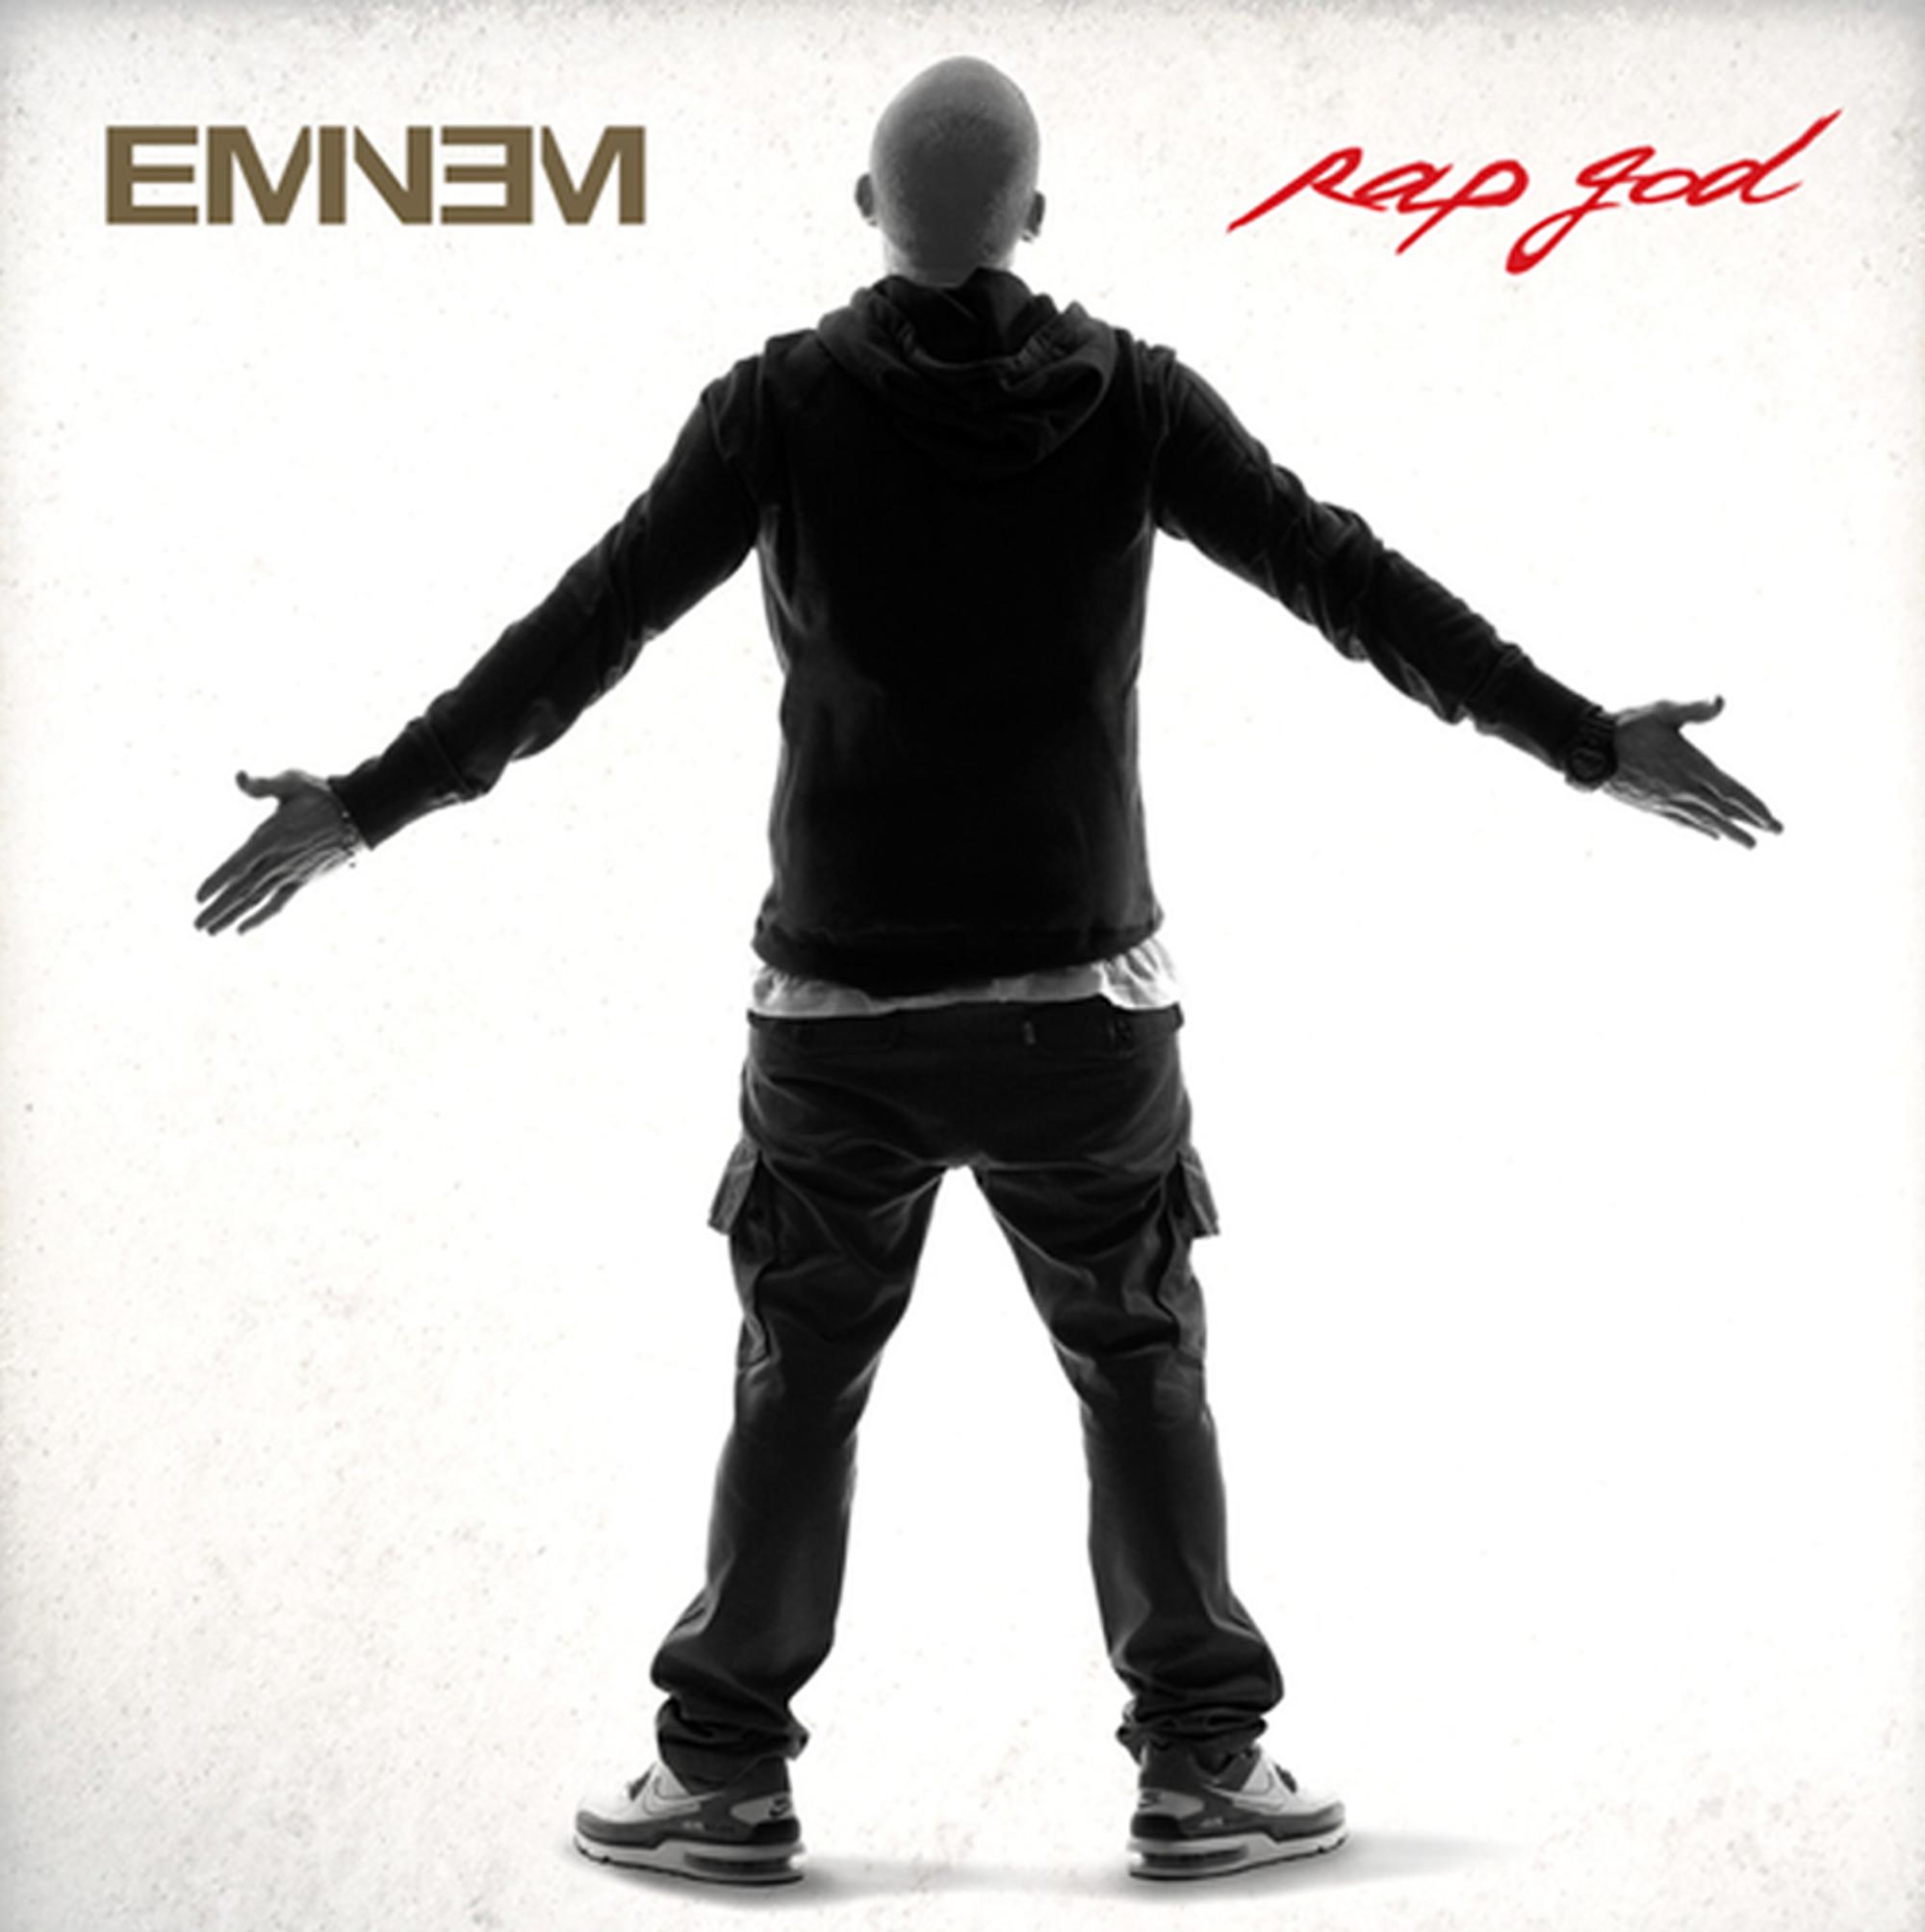 The cover of Eminem's Rap God